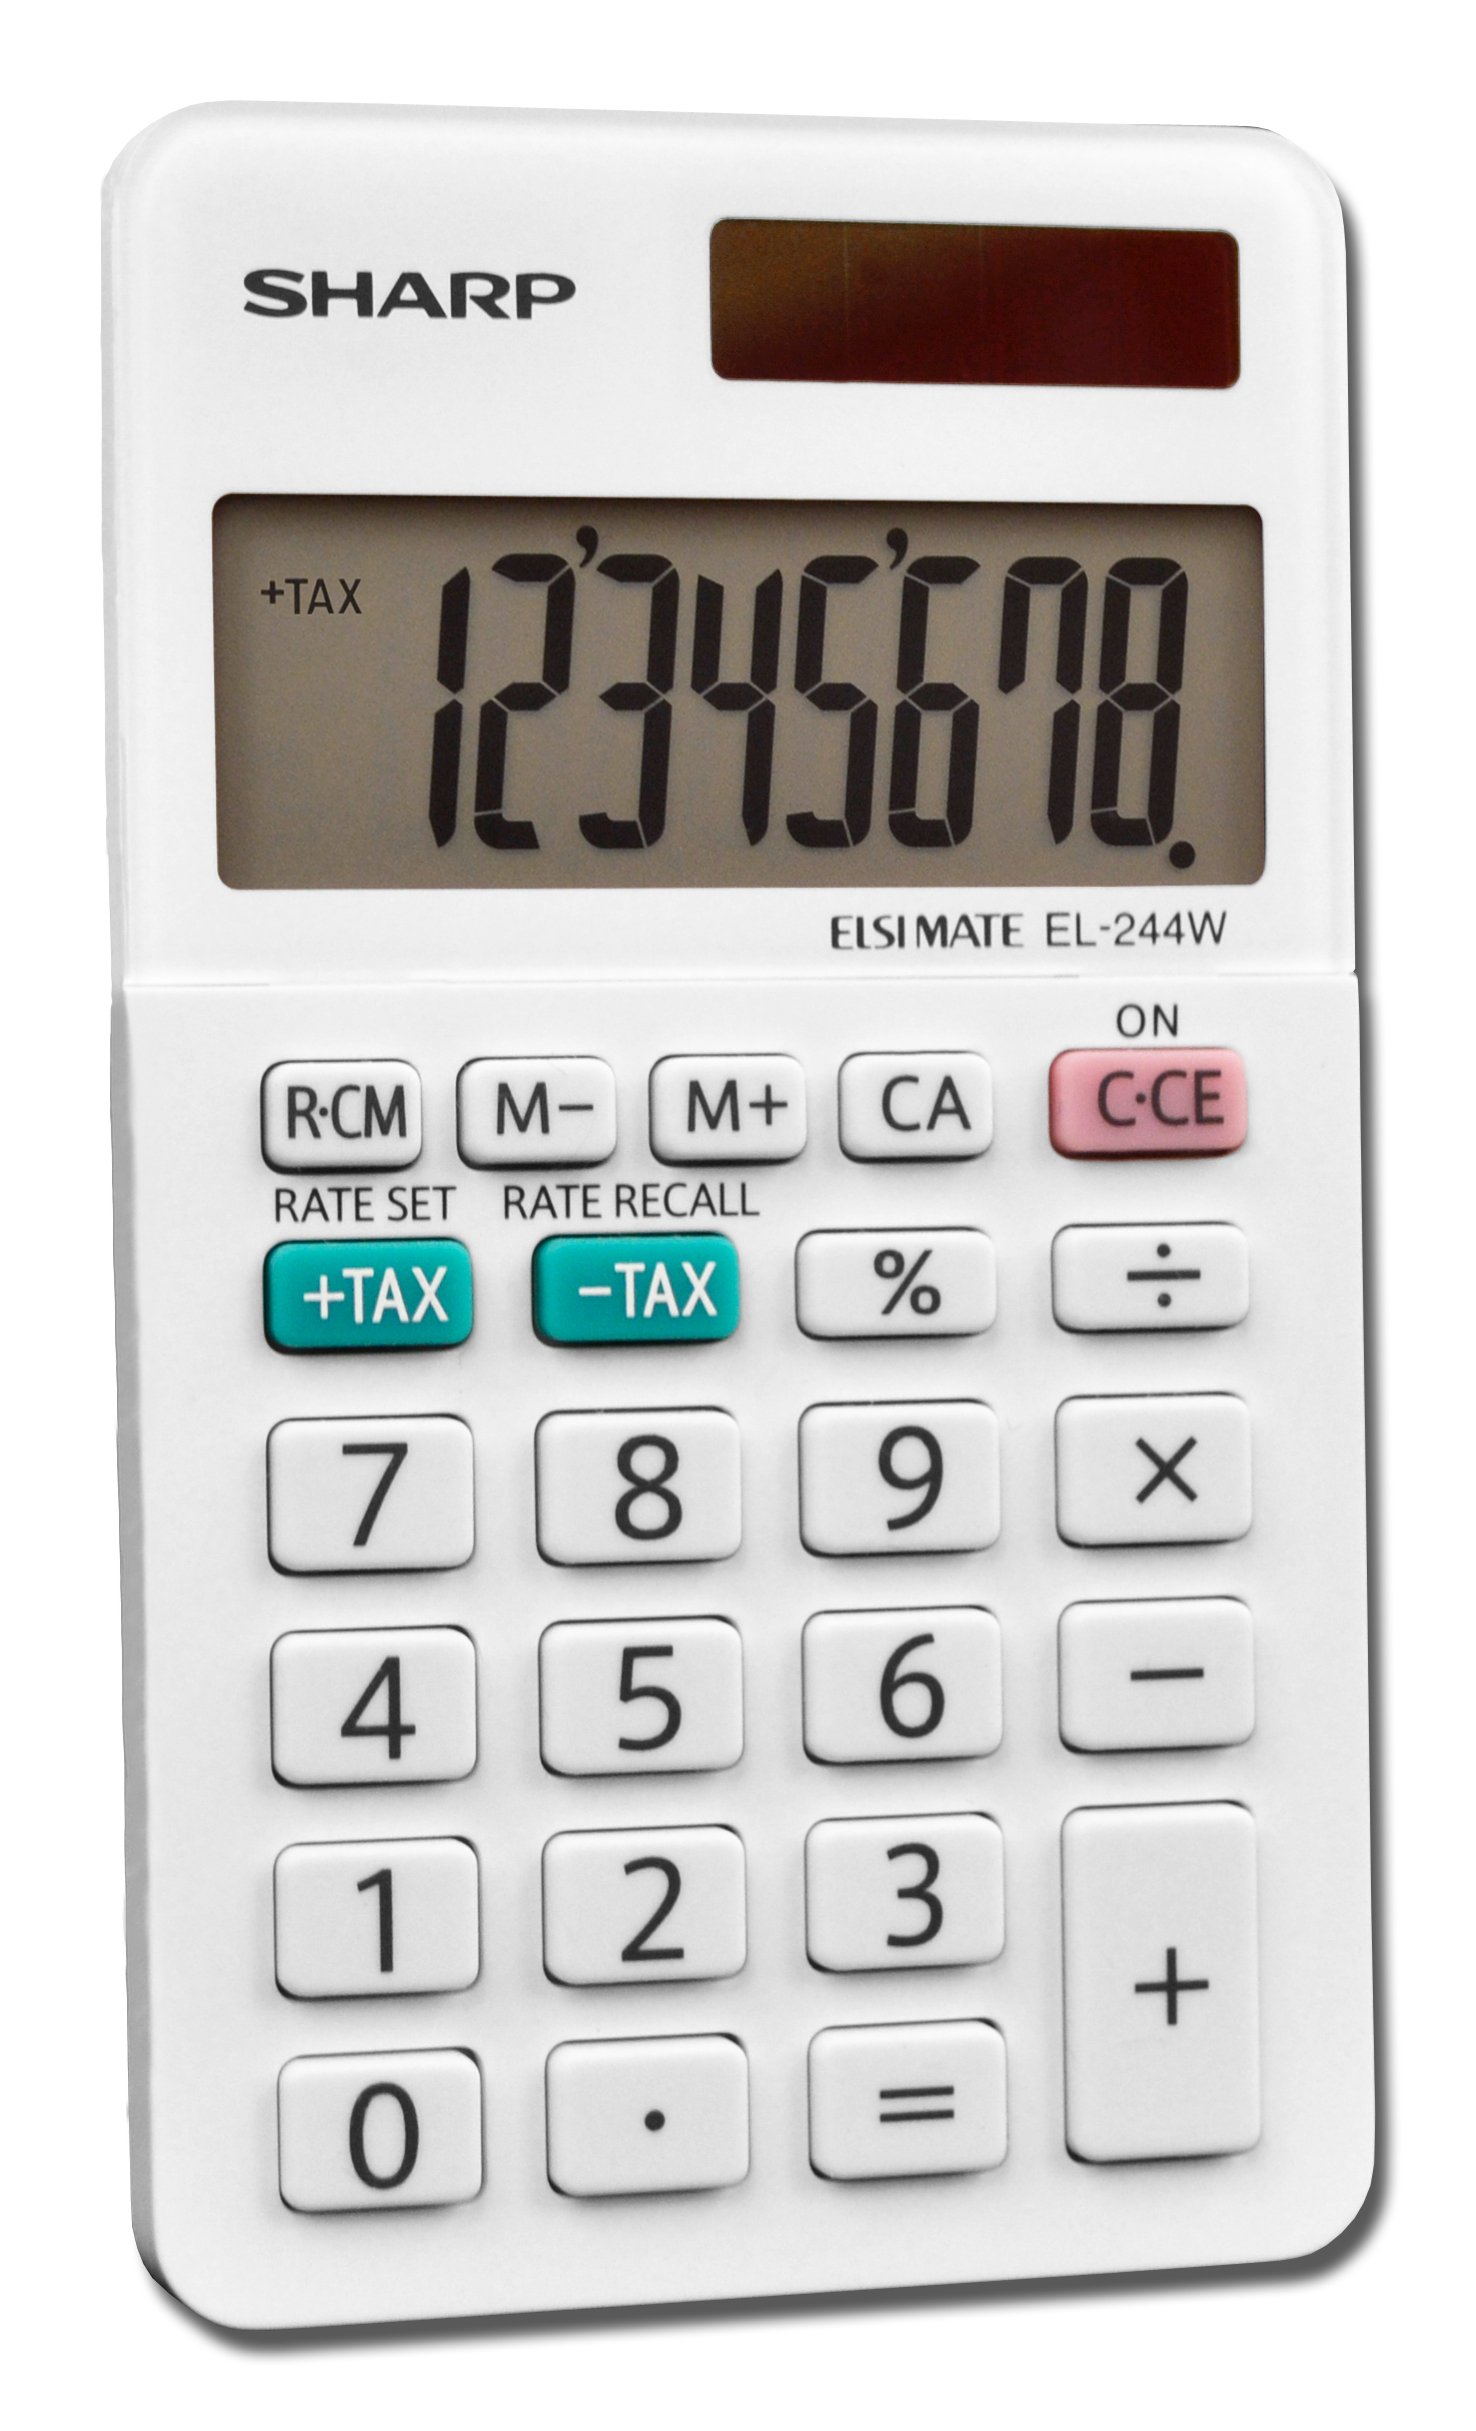 Sharp EL-244WB Business Calculator, White 2.125, 2.38 x 4.06 x 0.31 inches